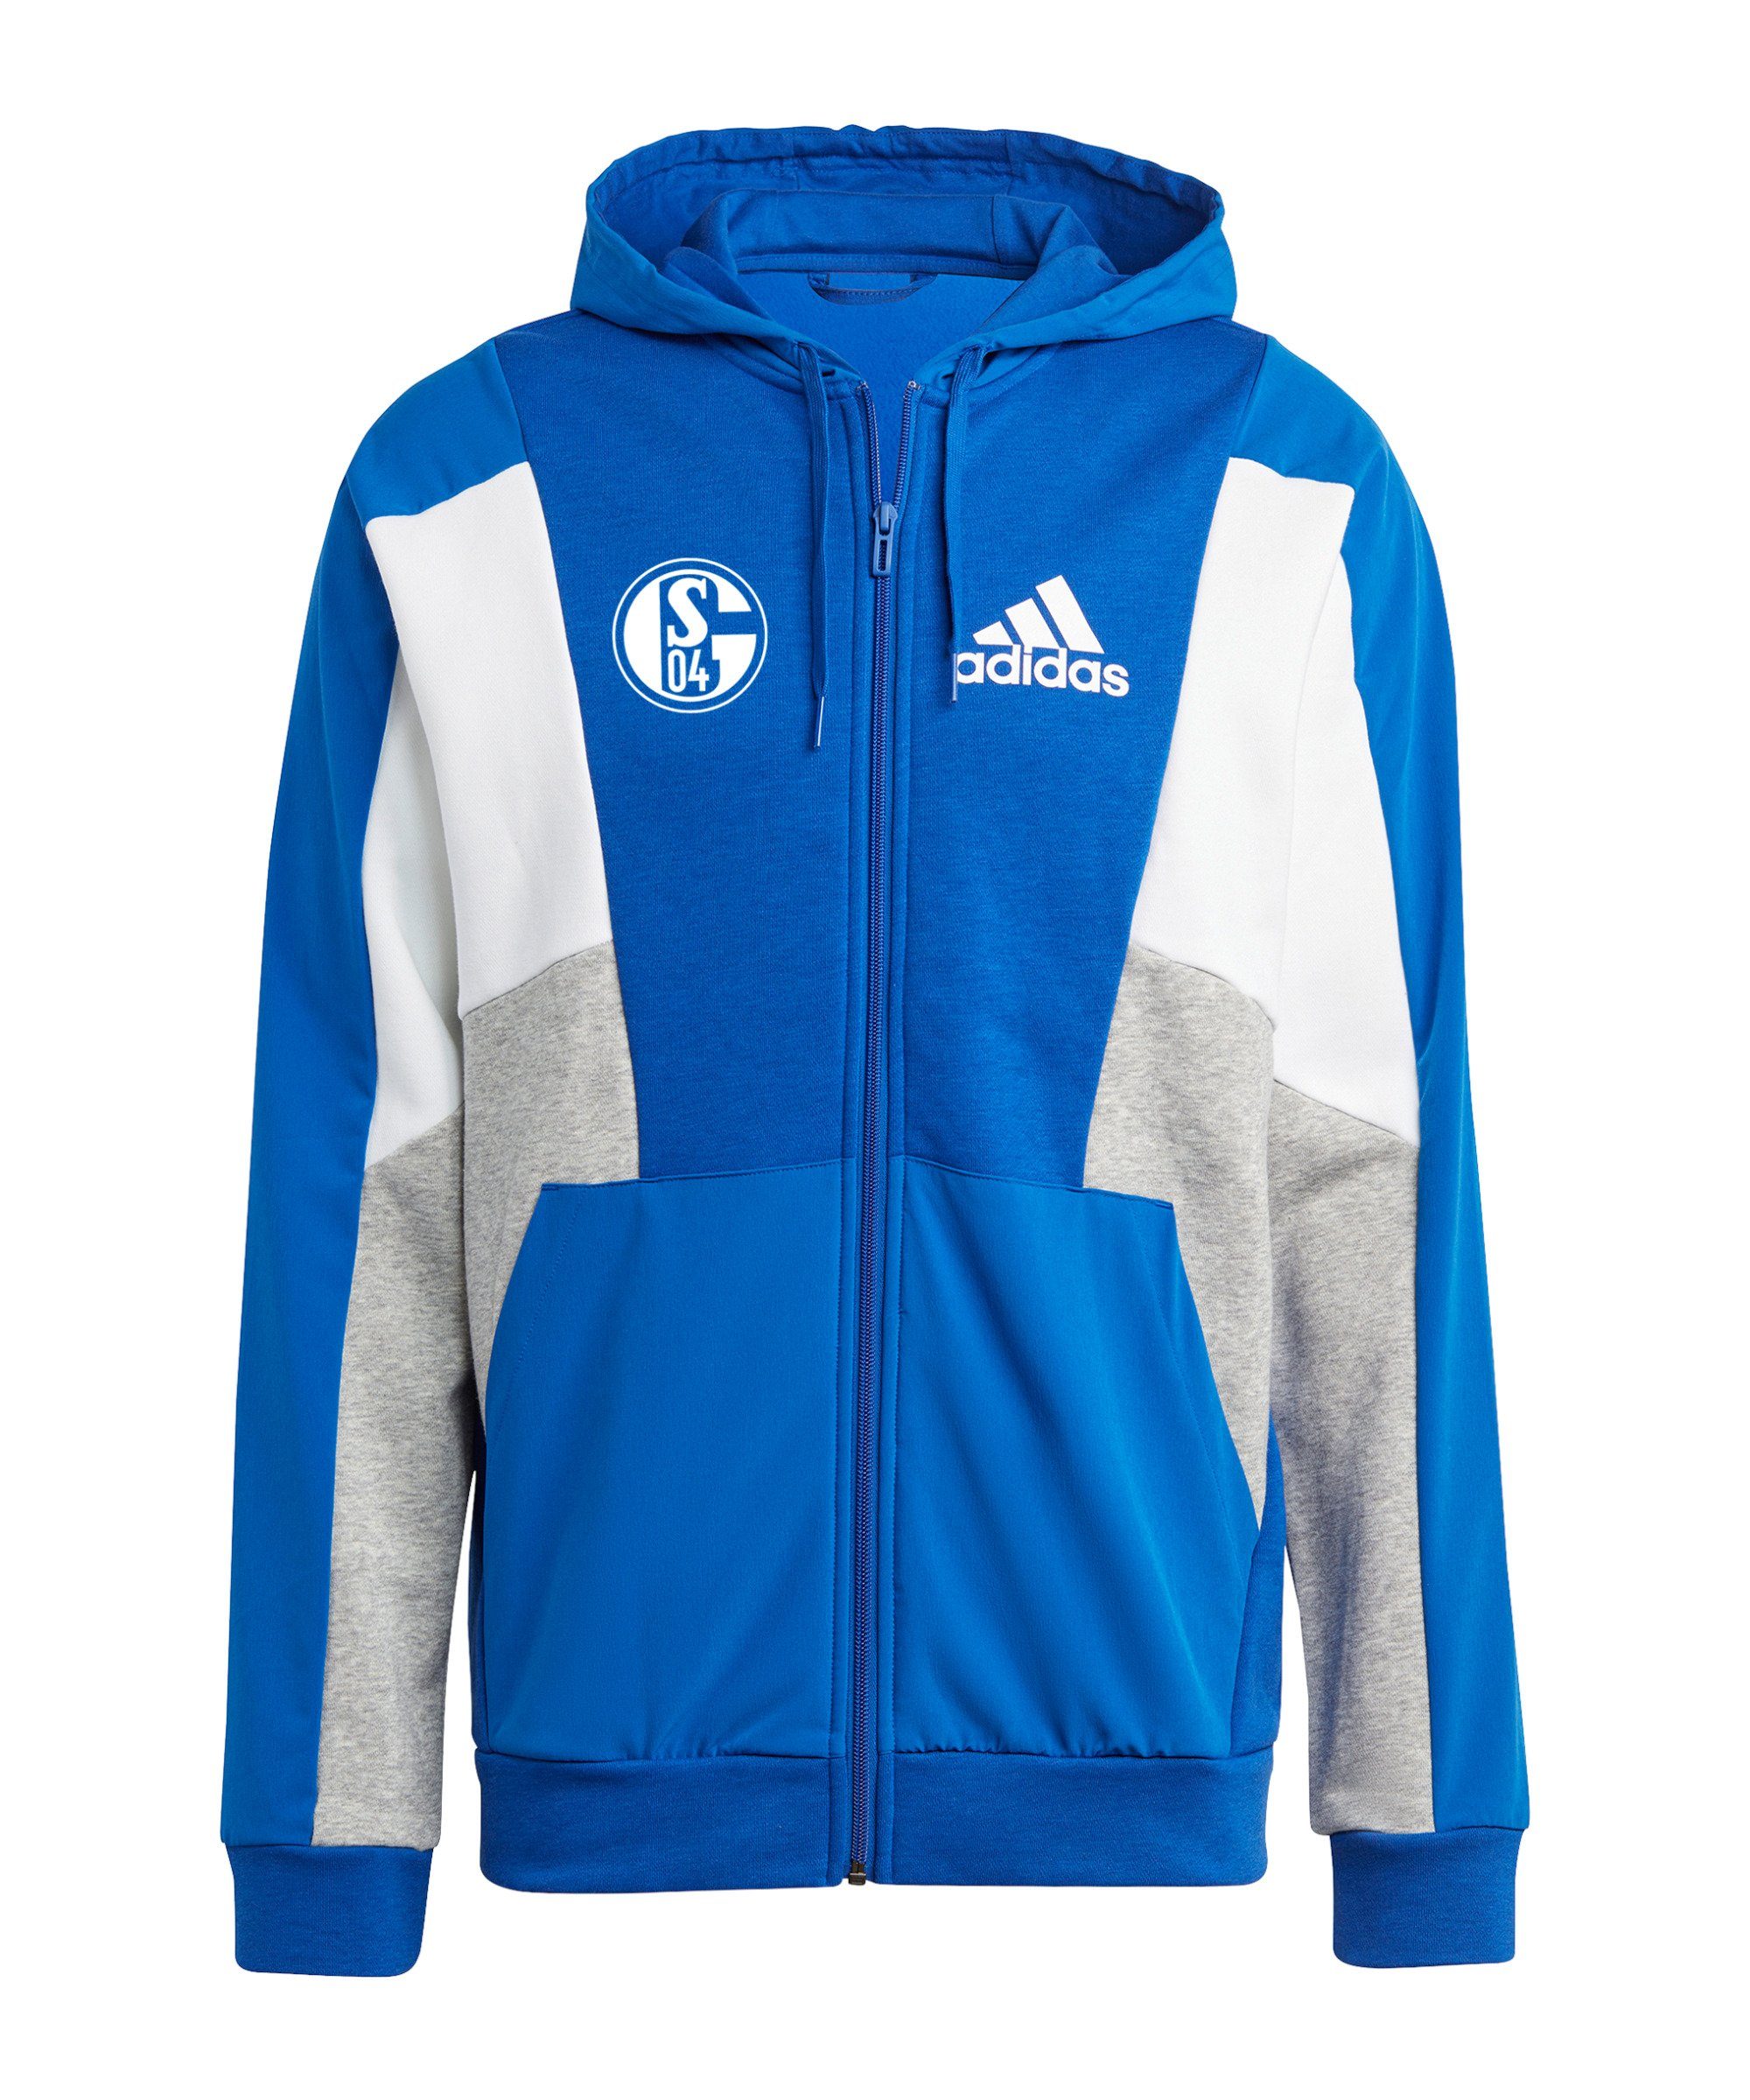 04 Sweatjacke Performance FC Kapuzenjacke Schalke adidas